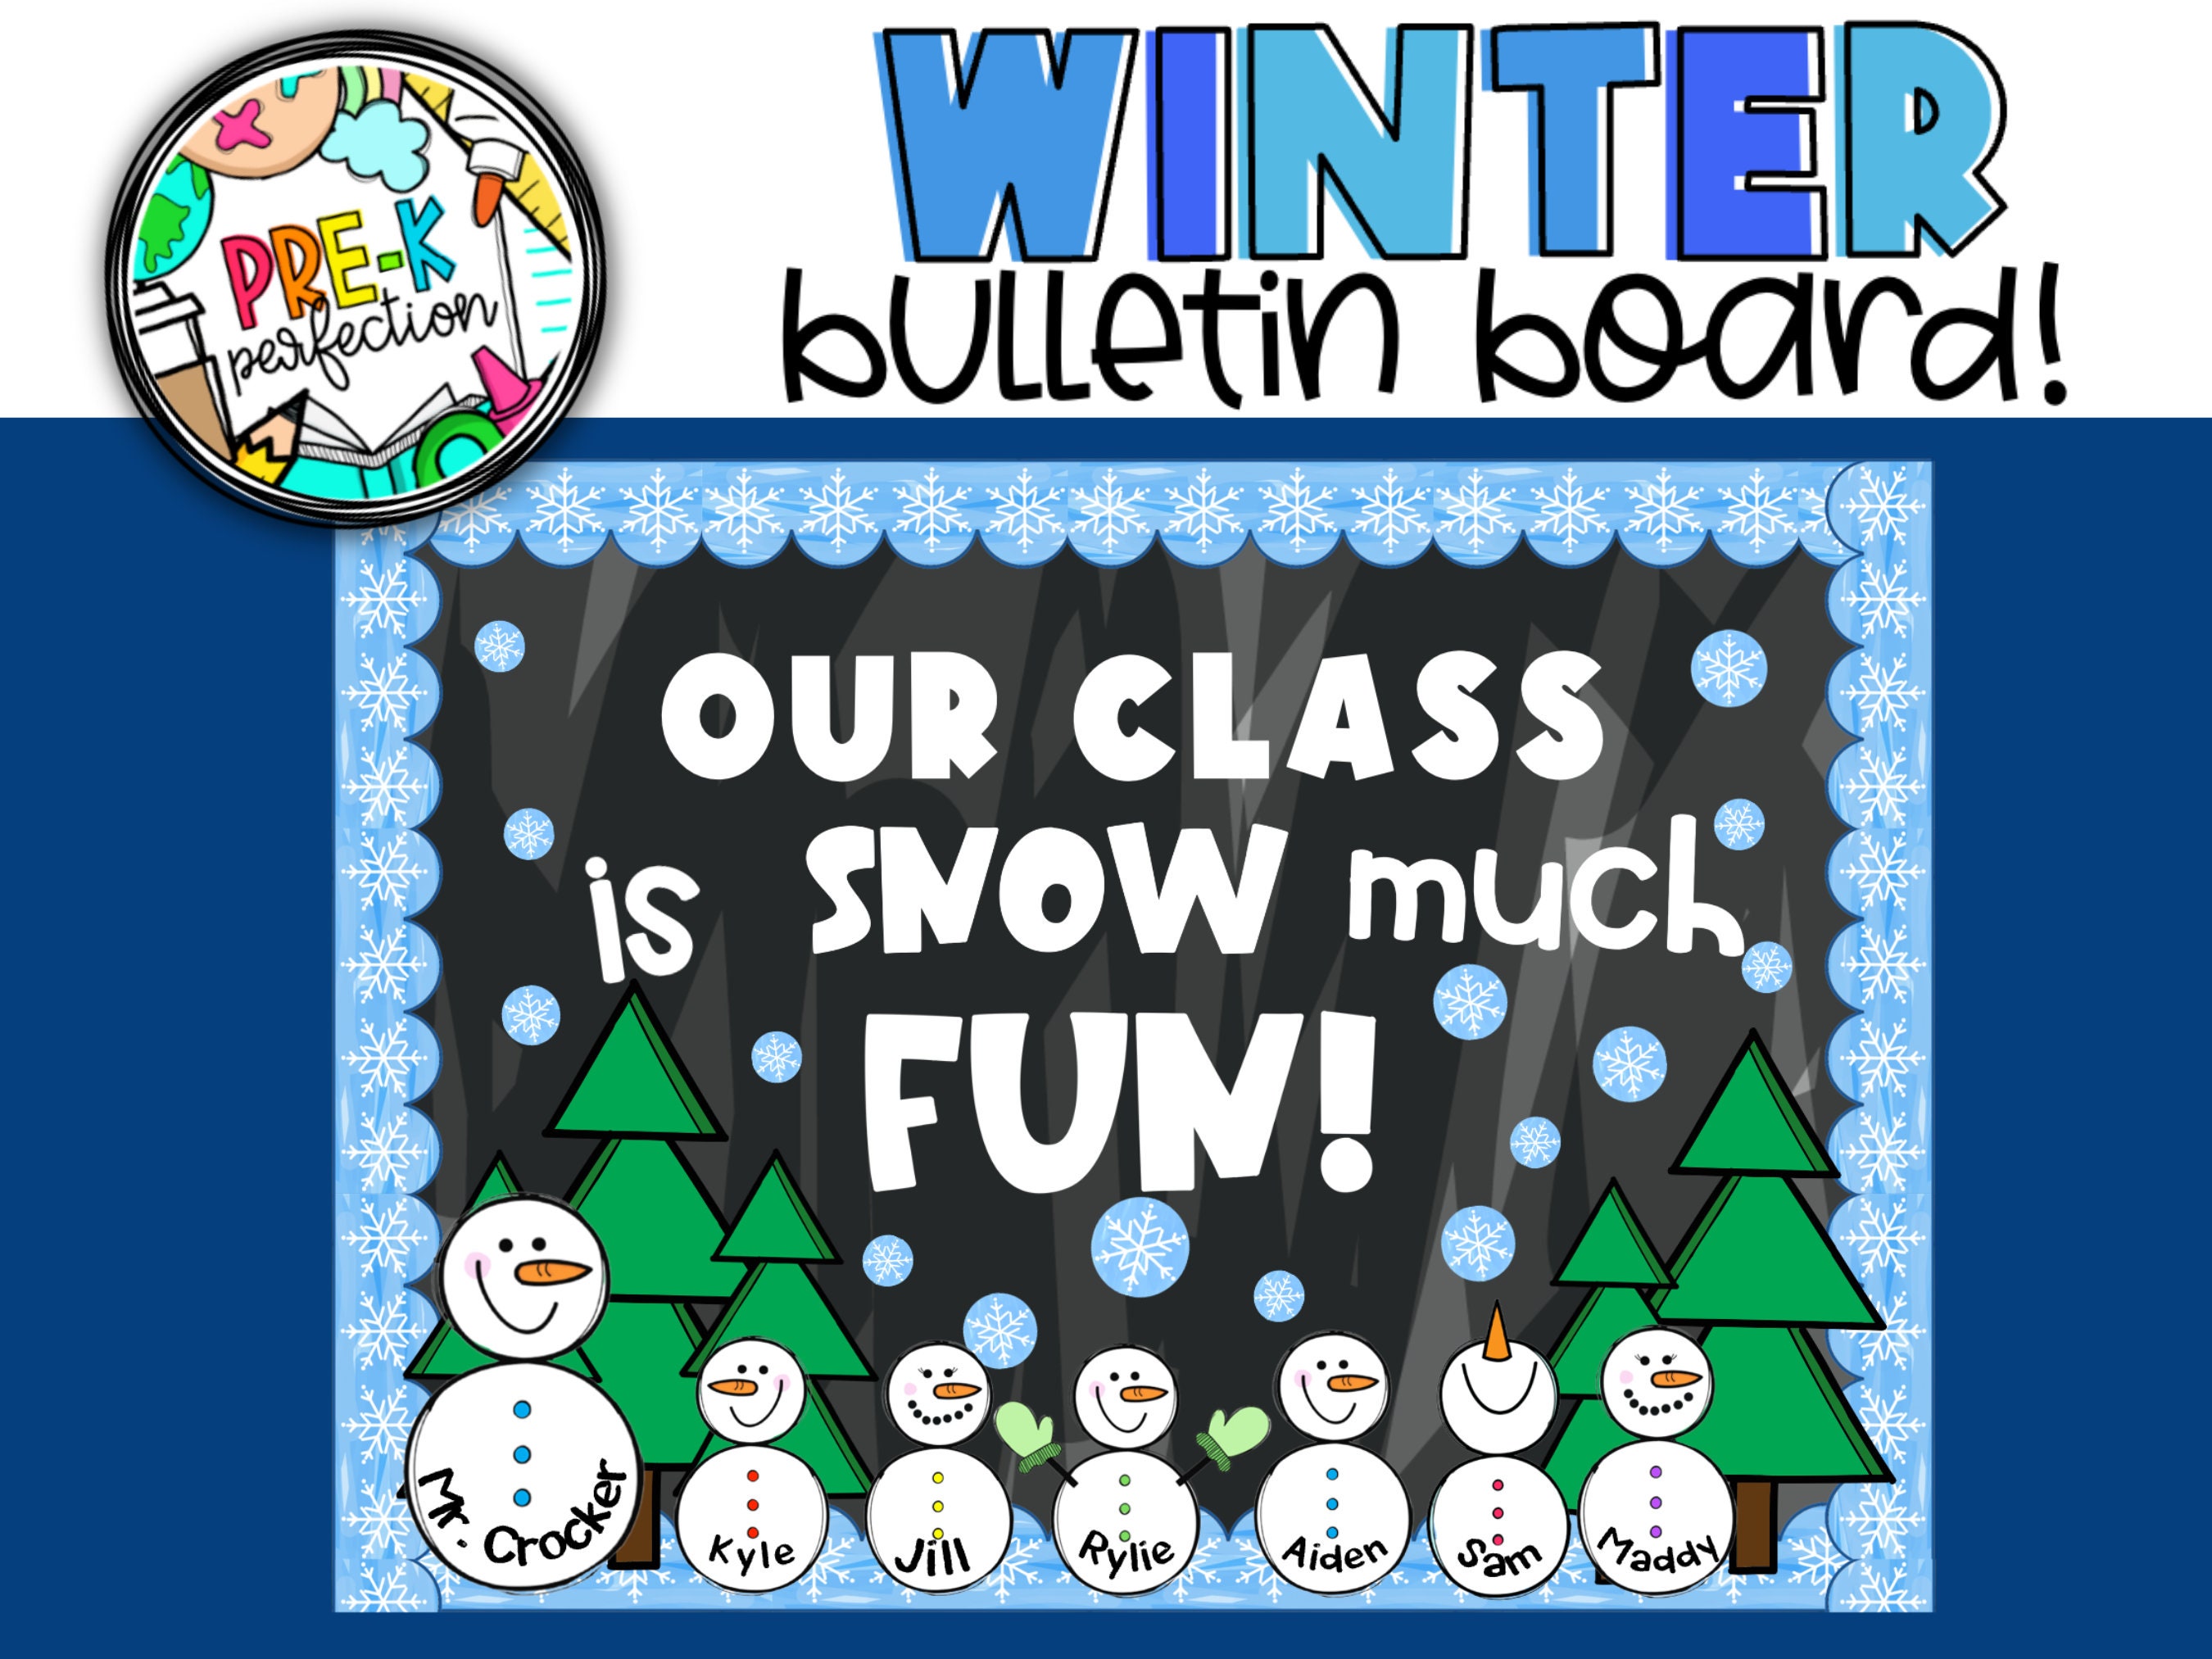 Looking for Fun Winter Bulletin Board Ideas & A Cool Craft